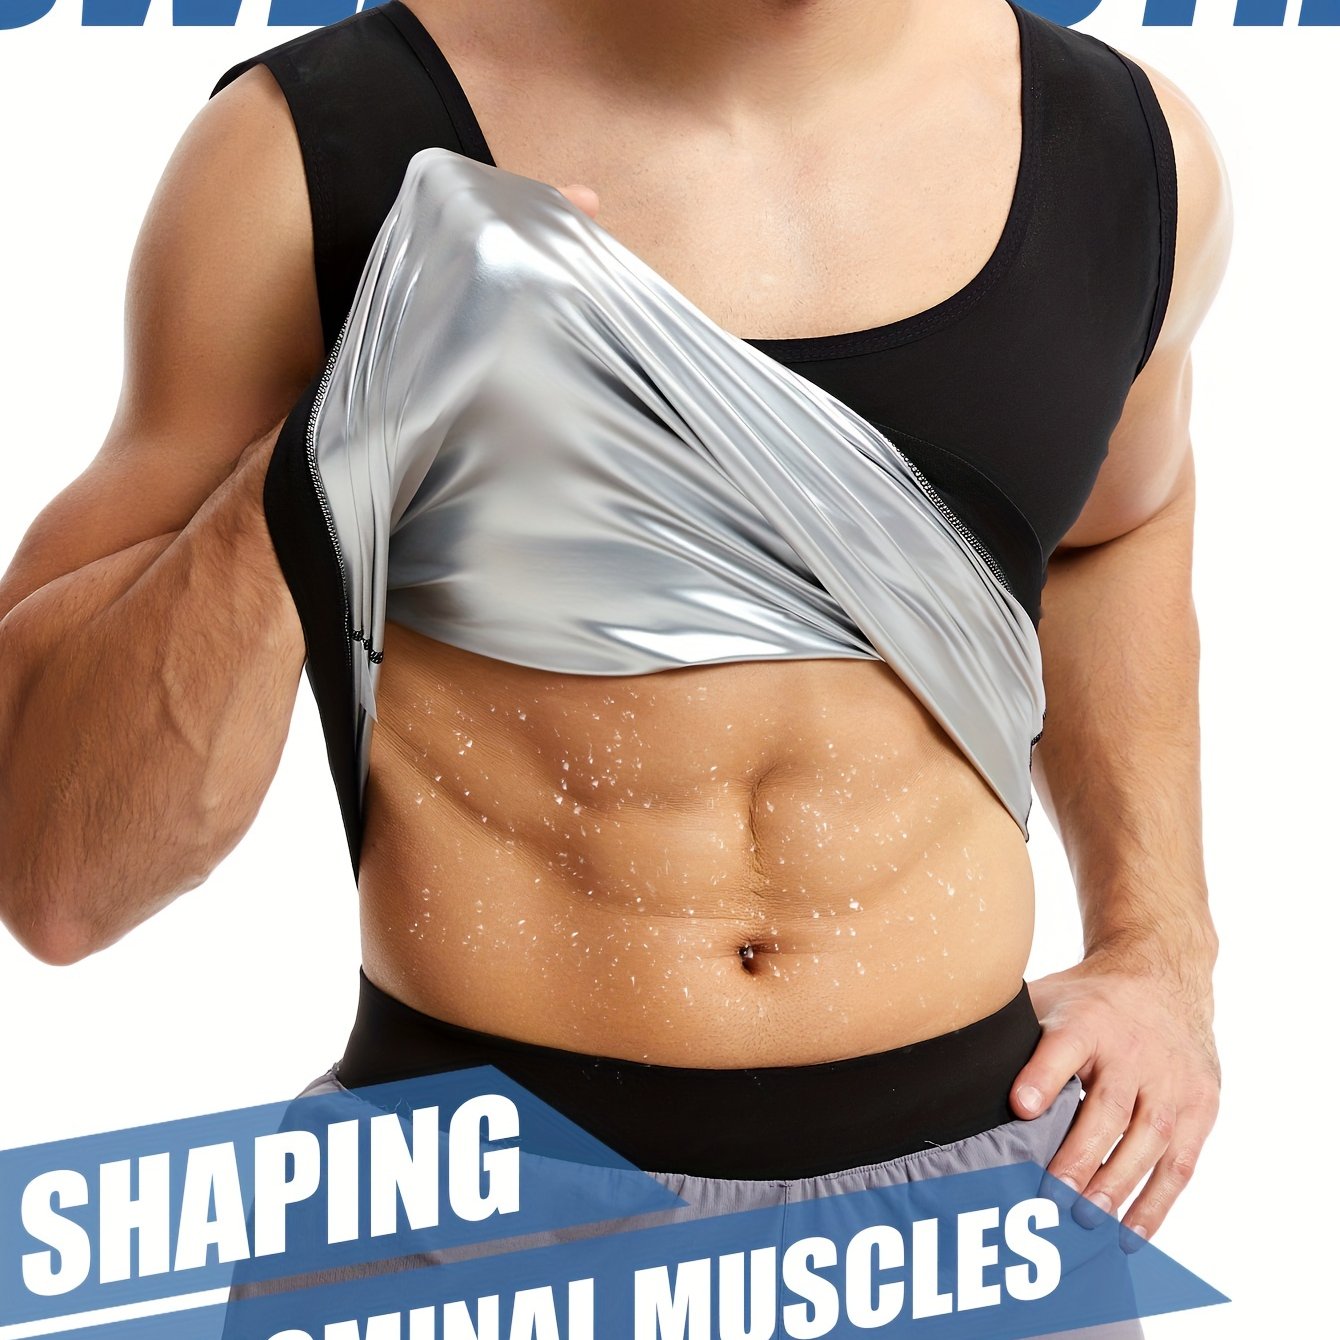 Compression Shirts for Men Shapewear Slimming Body Bahrain